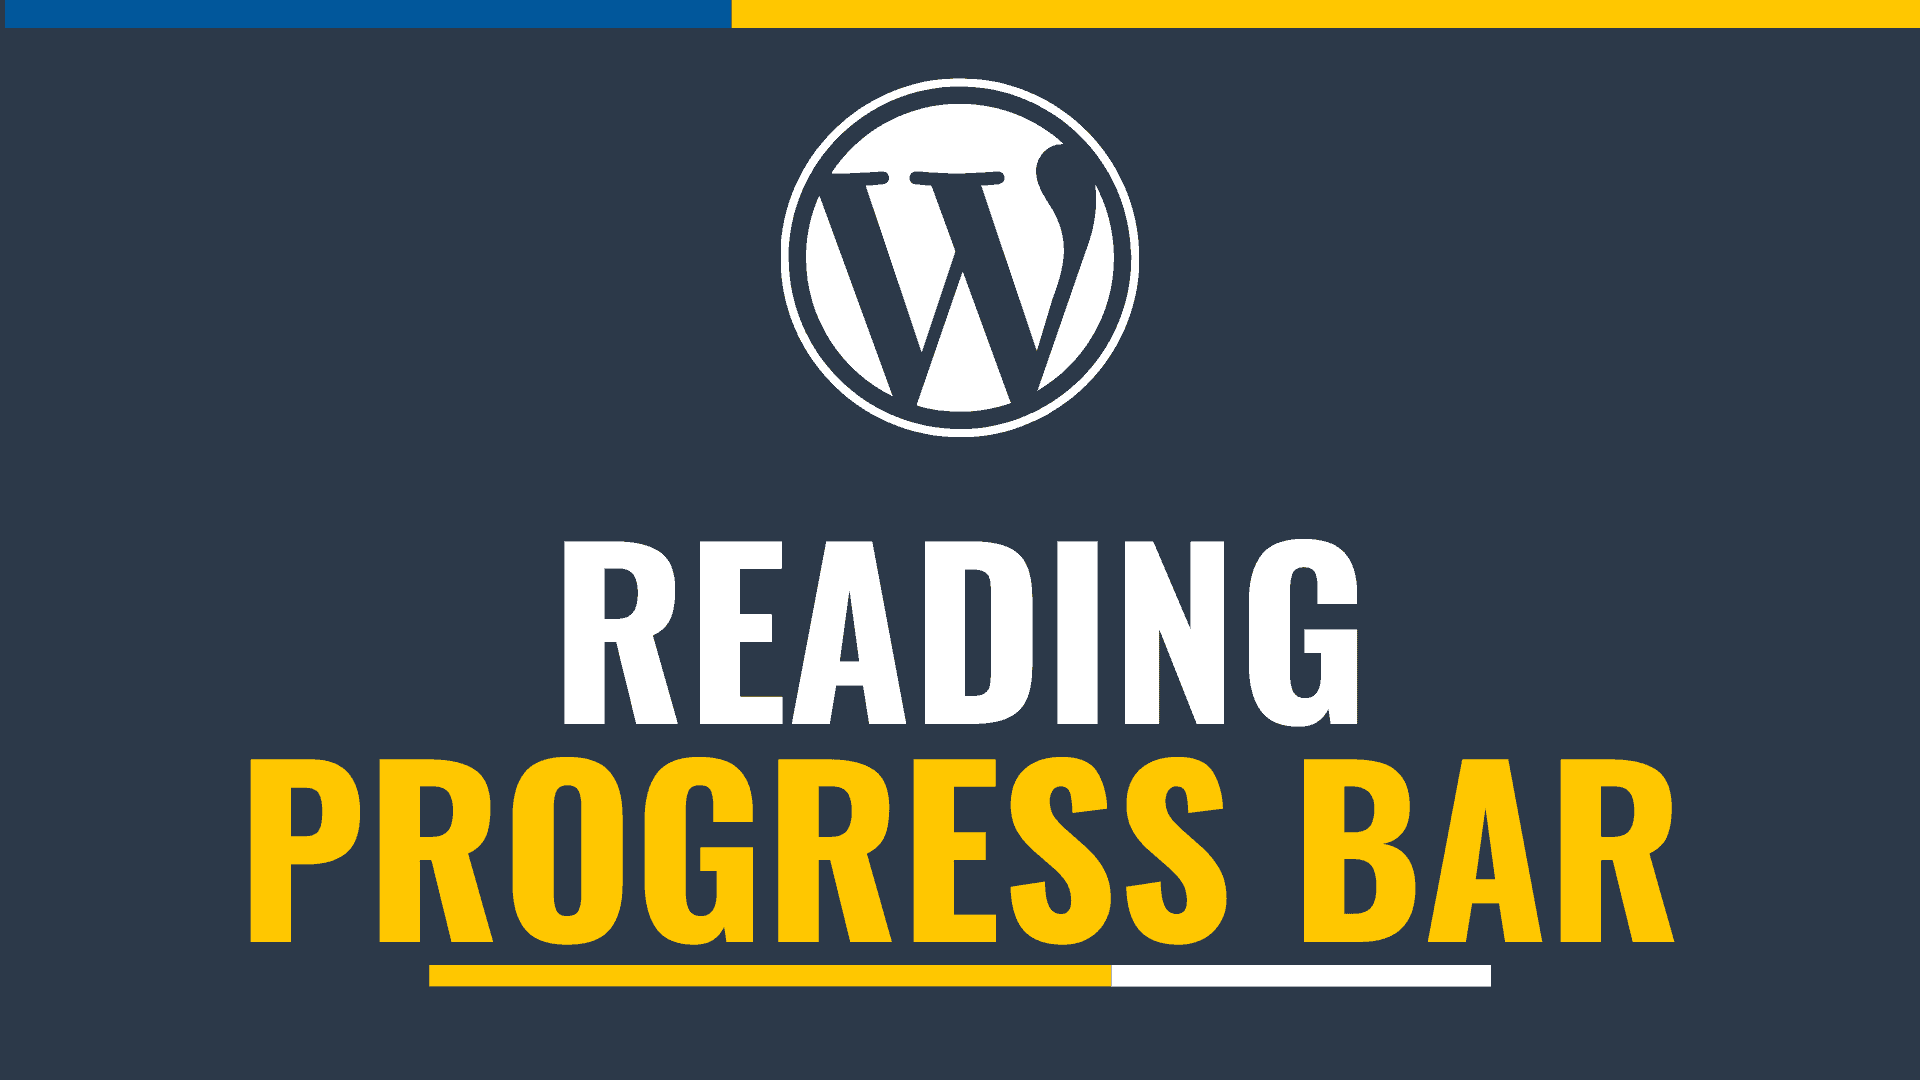 Reading Progress Bar in Wordpress